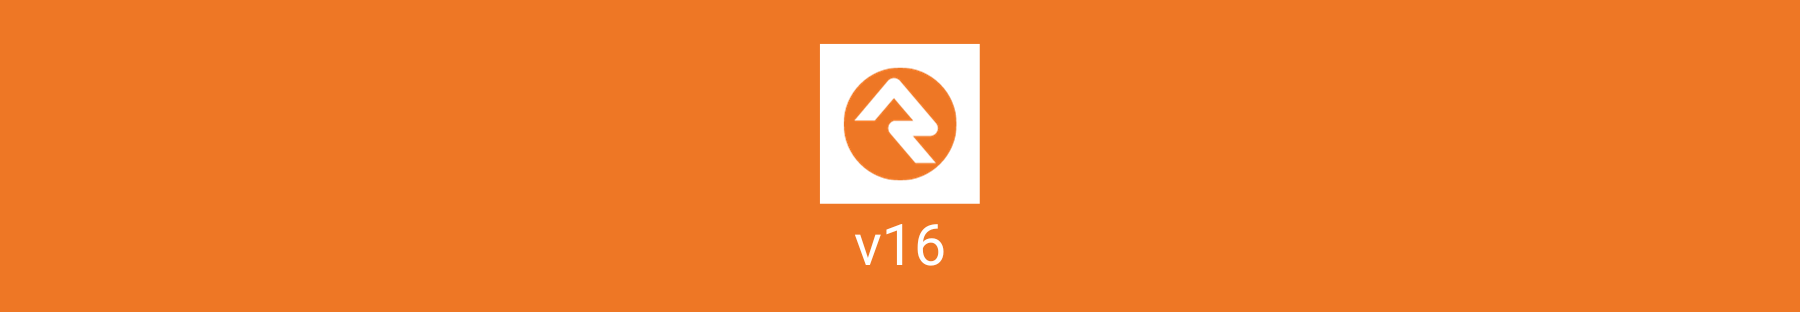 v16.0 Updates Video